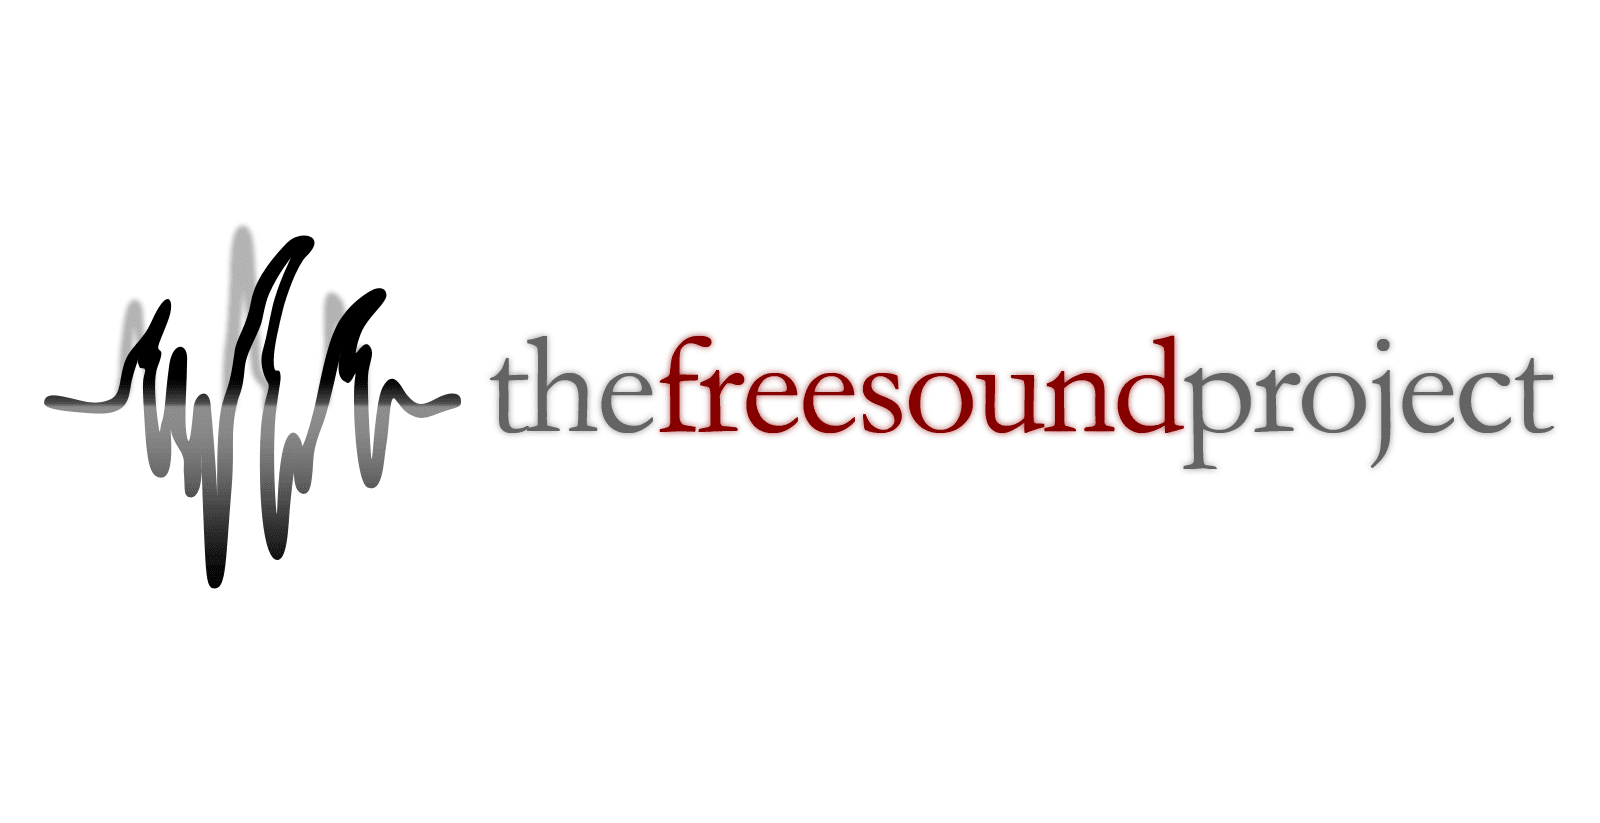 Freesound org